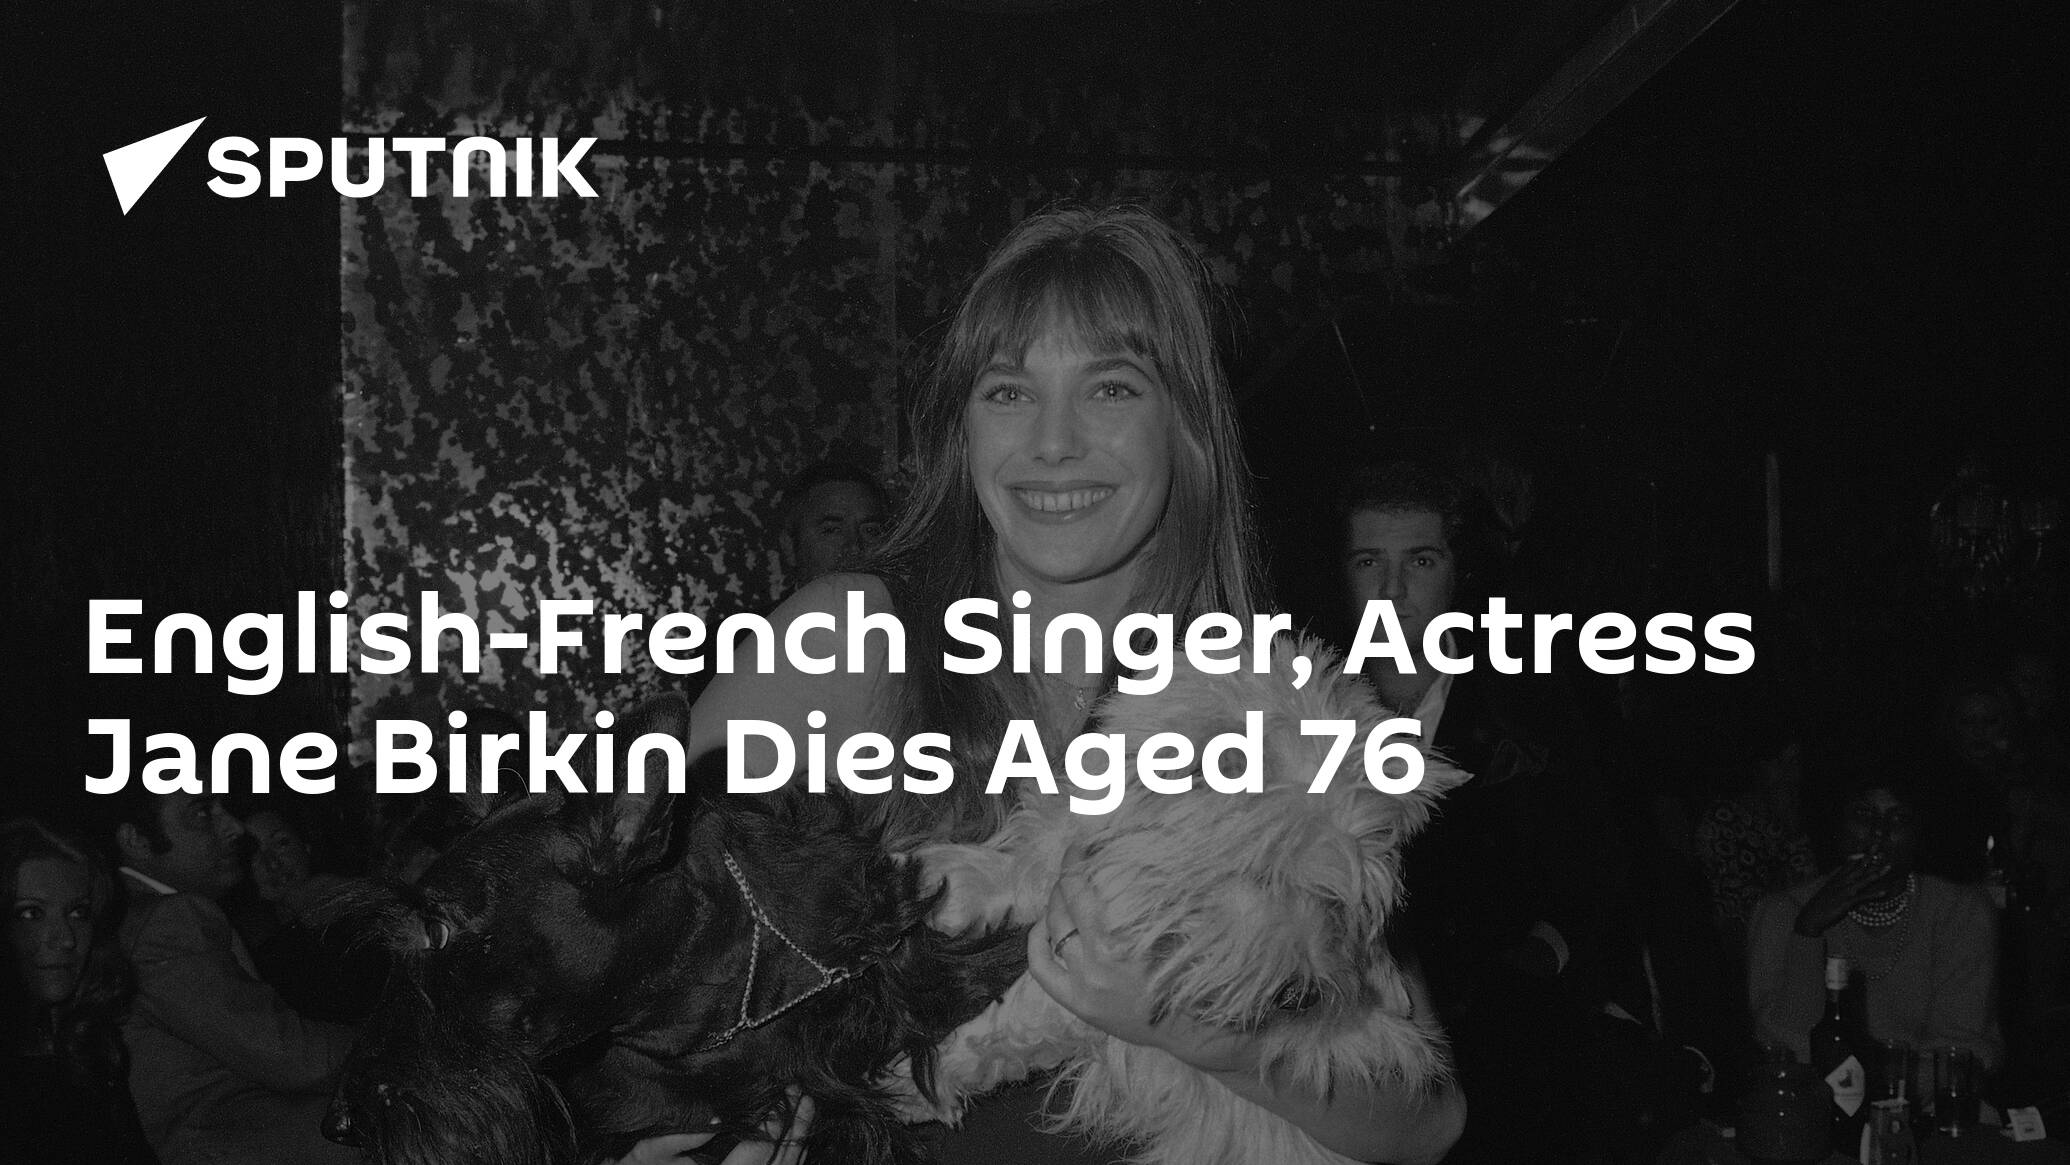 English-French Singer, Actress Jane Birkin Dies Aged 76